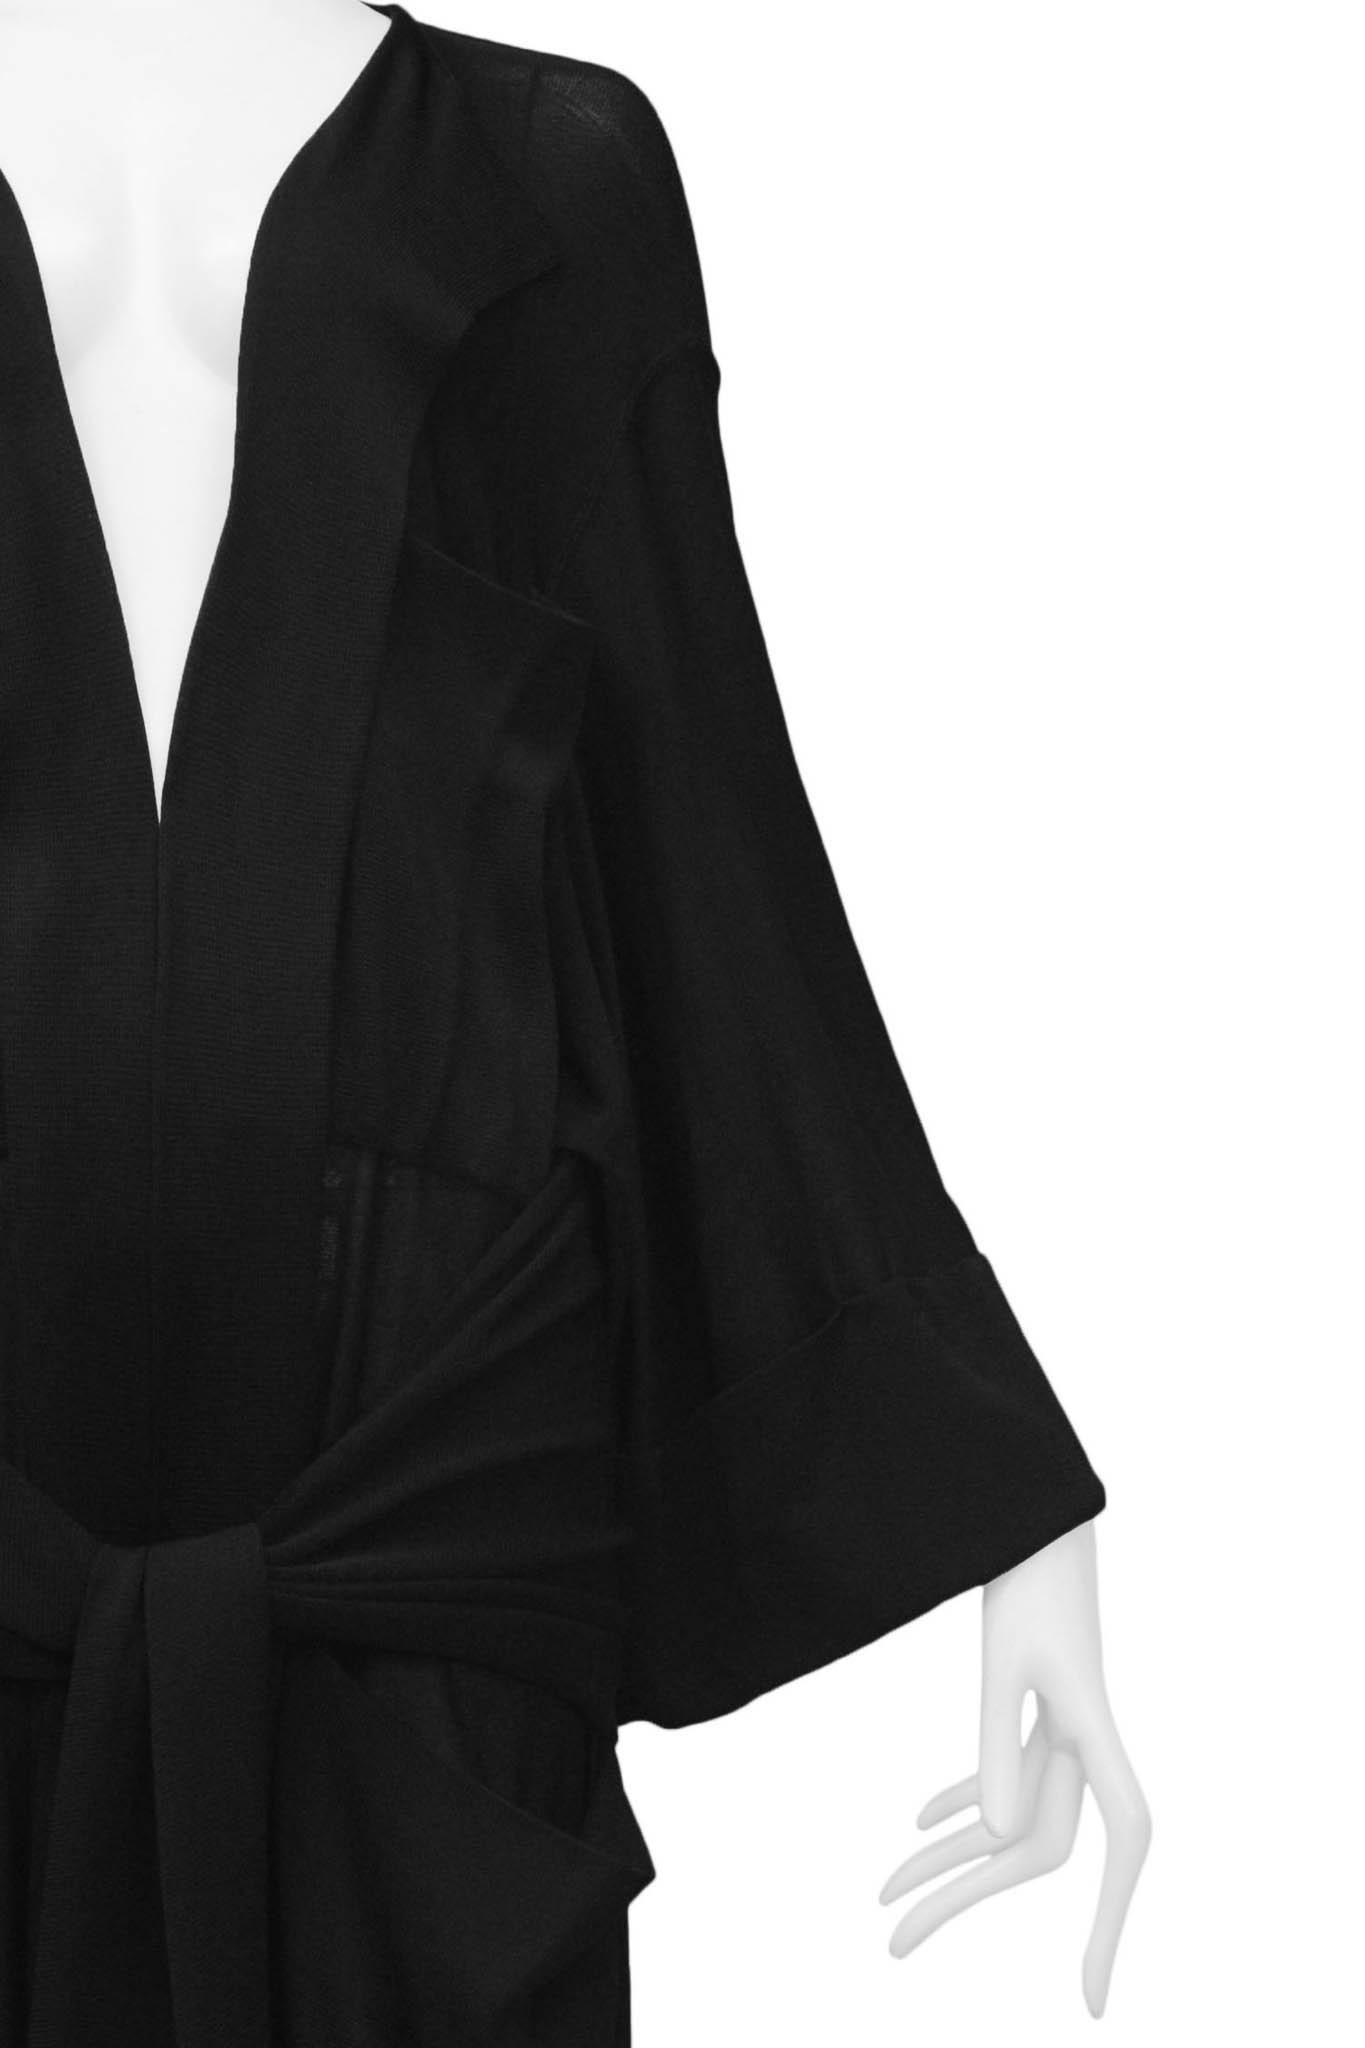 Rare Azzedine Alaia Black Woven Kimono Cardigan Duster 1985 1